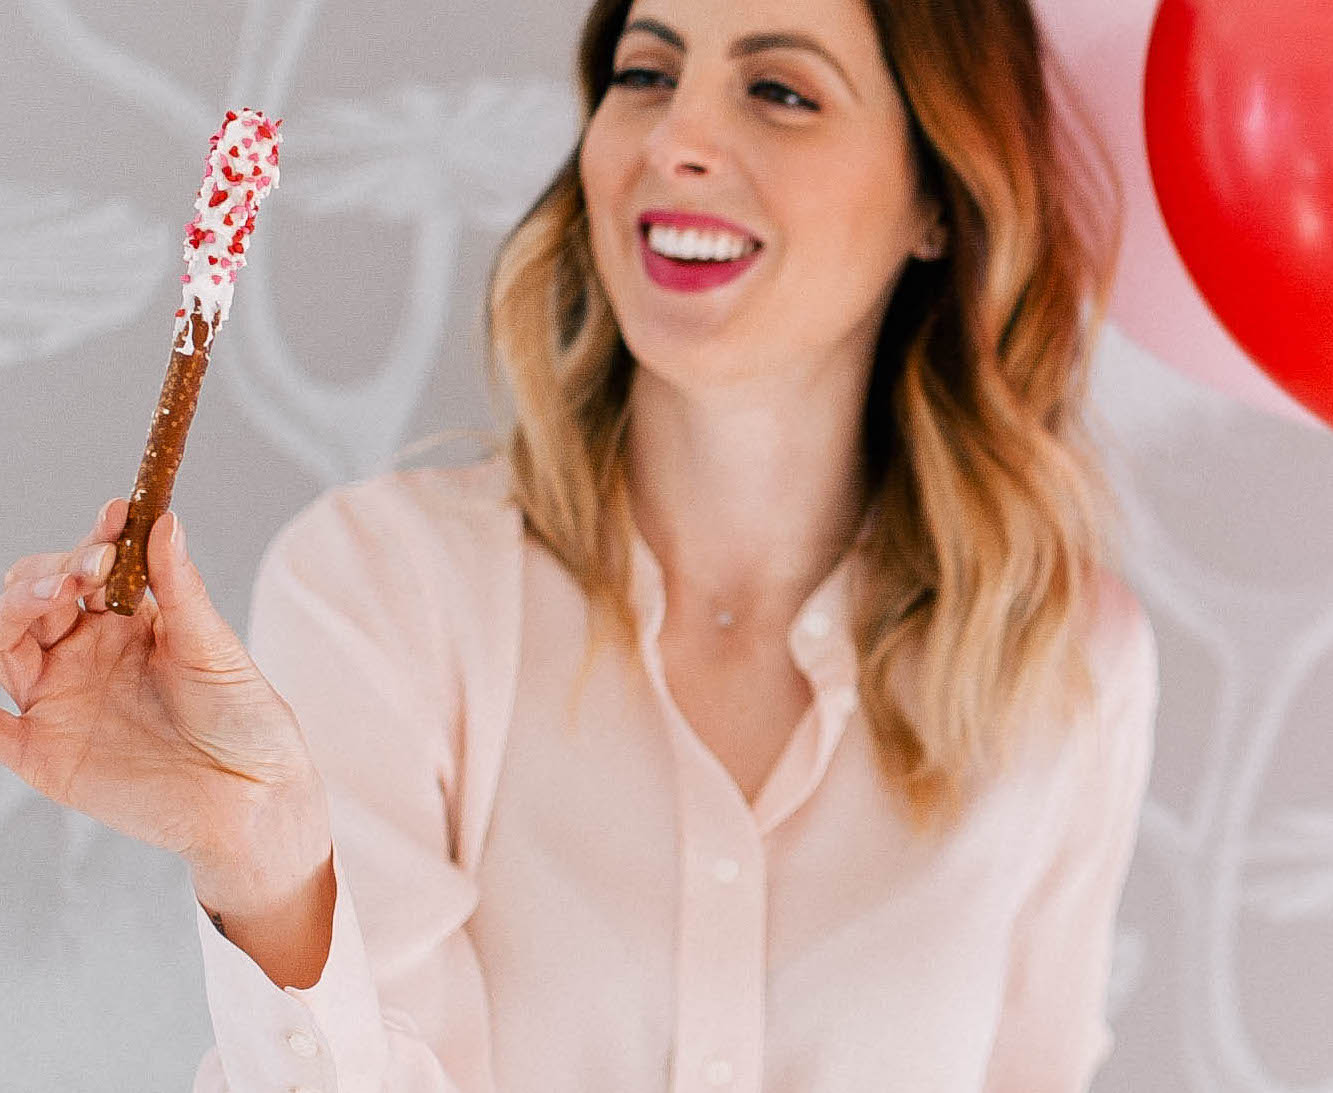 Eva Amurri shares a cute Valentine's Day DIY for Chocolate Pretzel Cupid Arrows